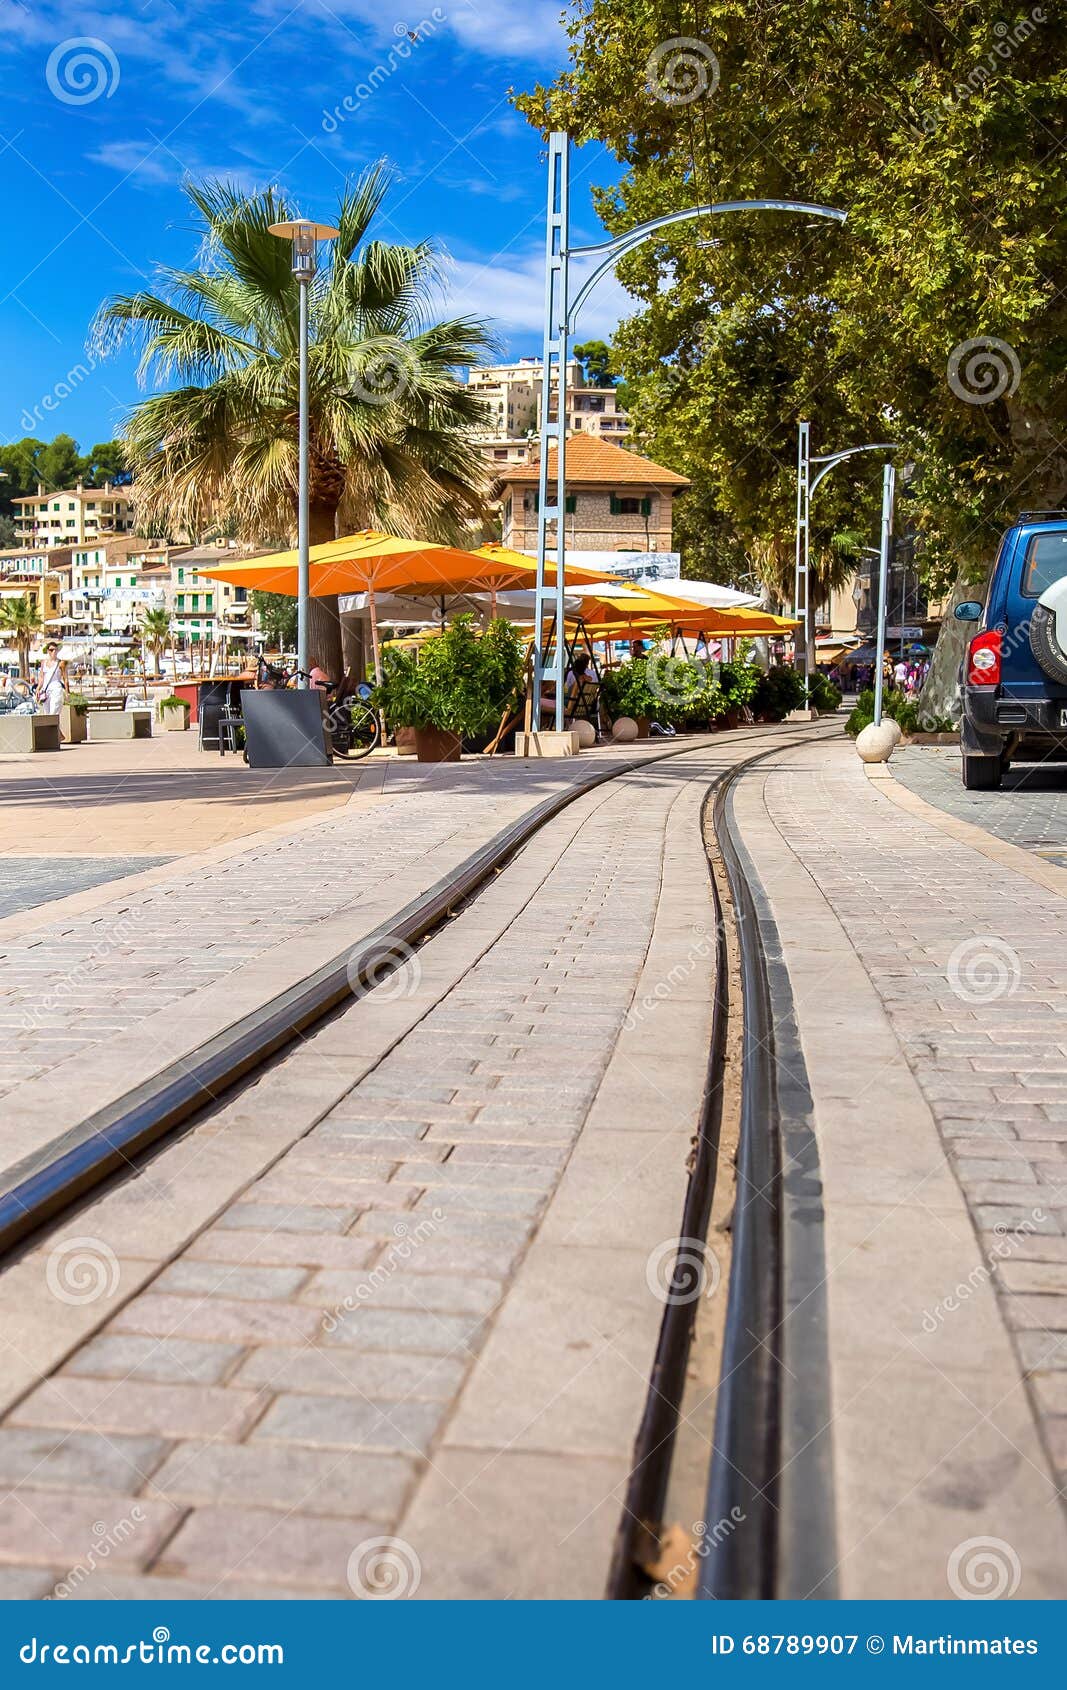 tram track in port soller